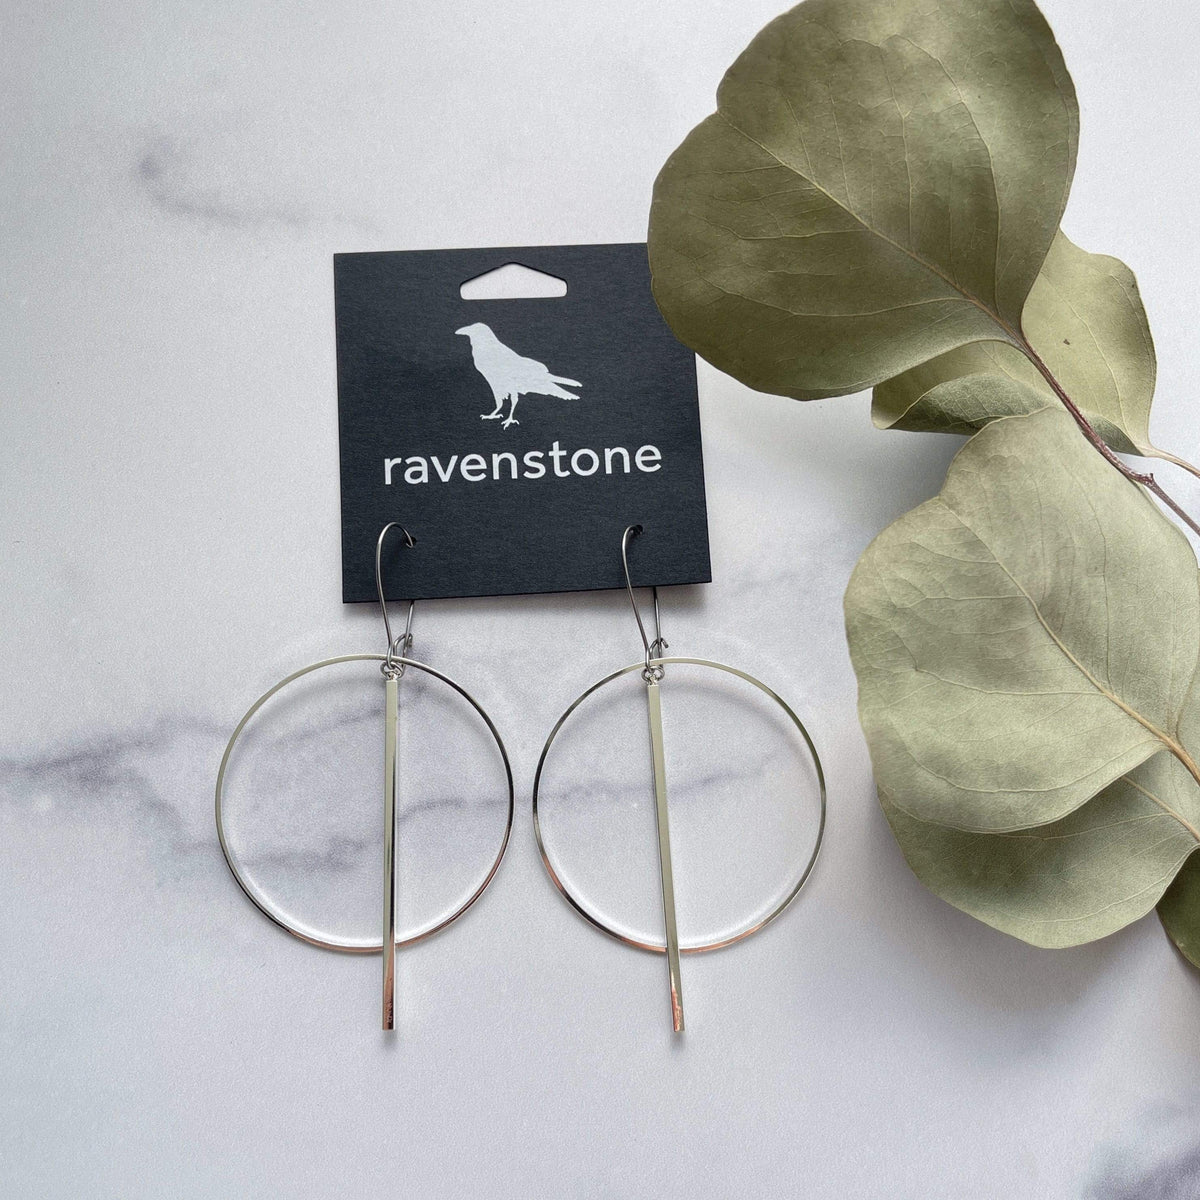 Ravenstone The Silver Imagination Earrings